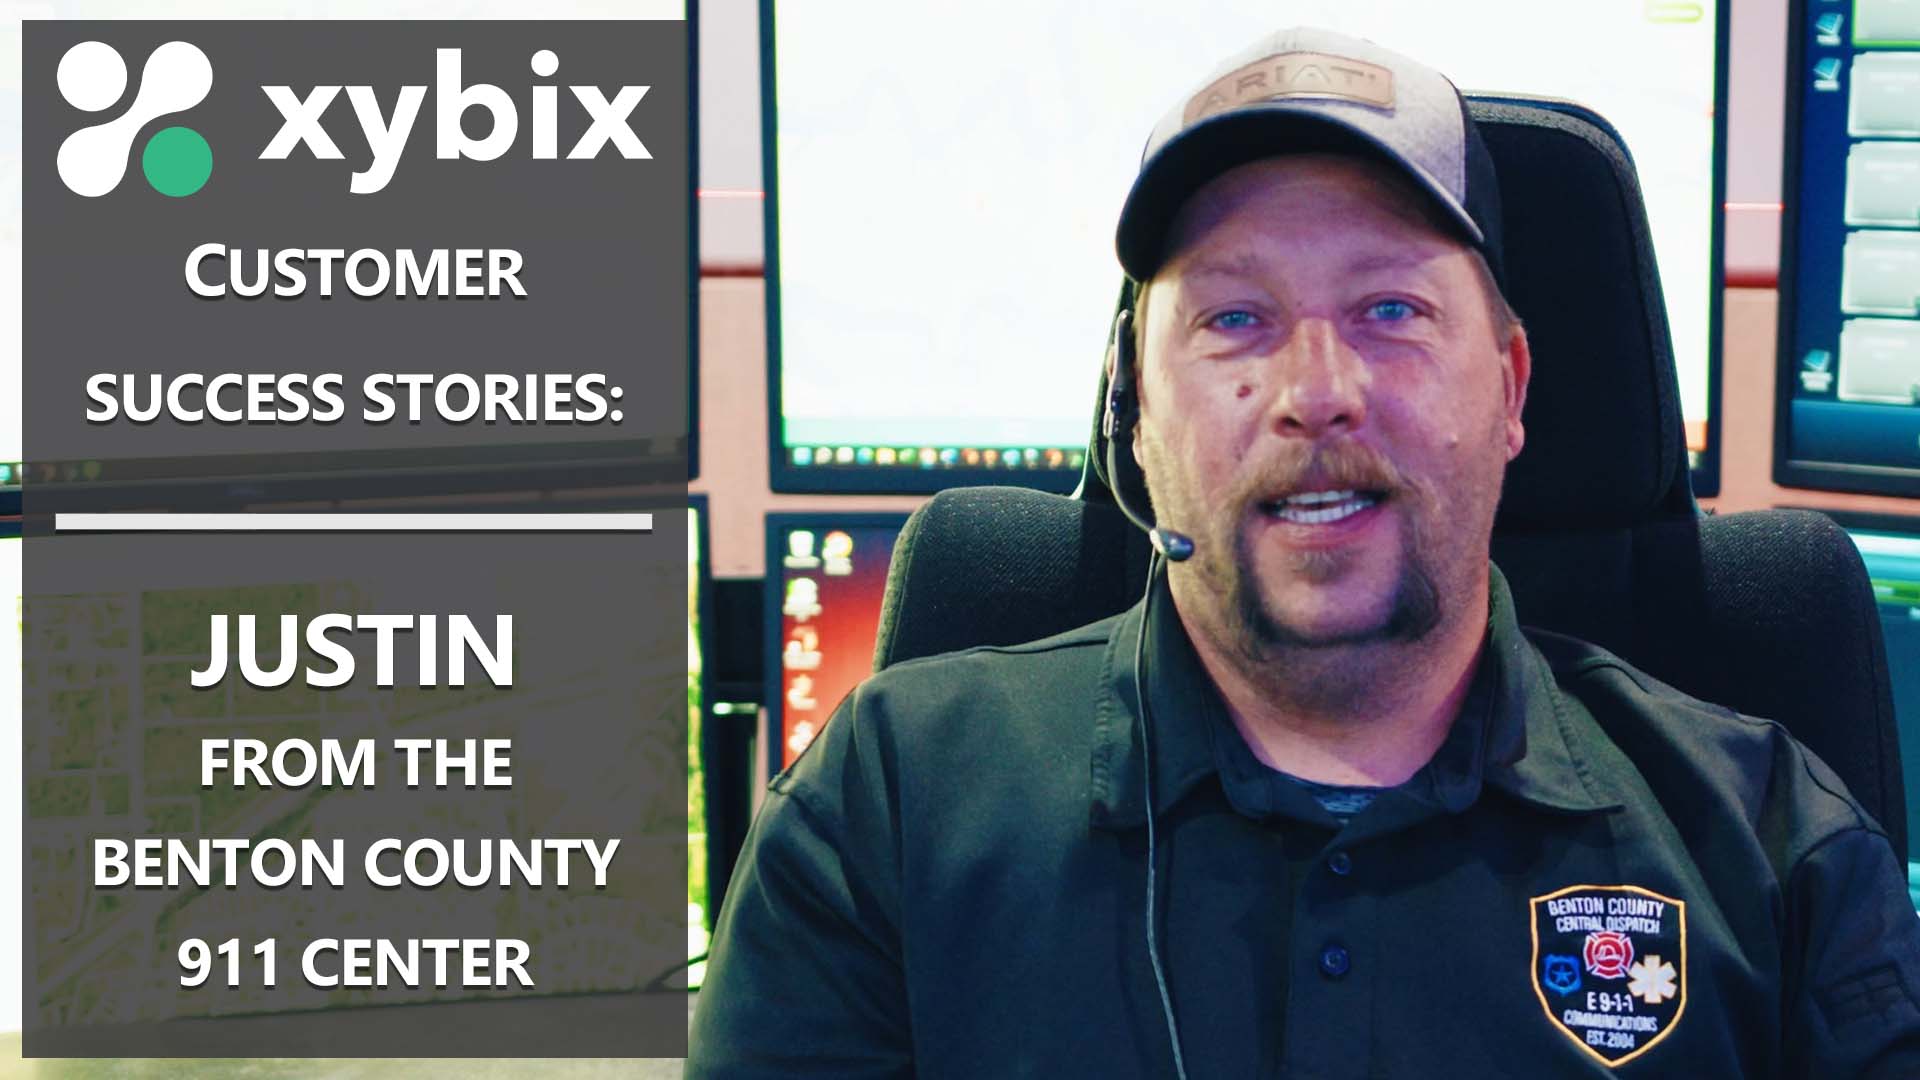 Xybix Testimonials - Justin from the Benton County 911 Center in Missouri